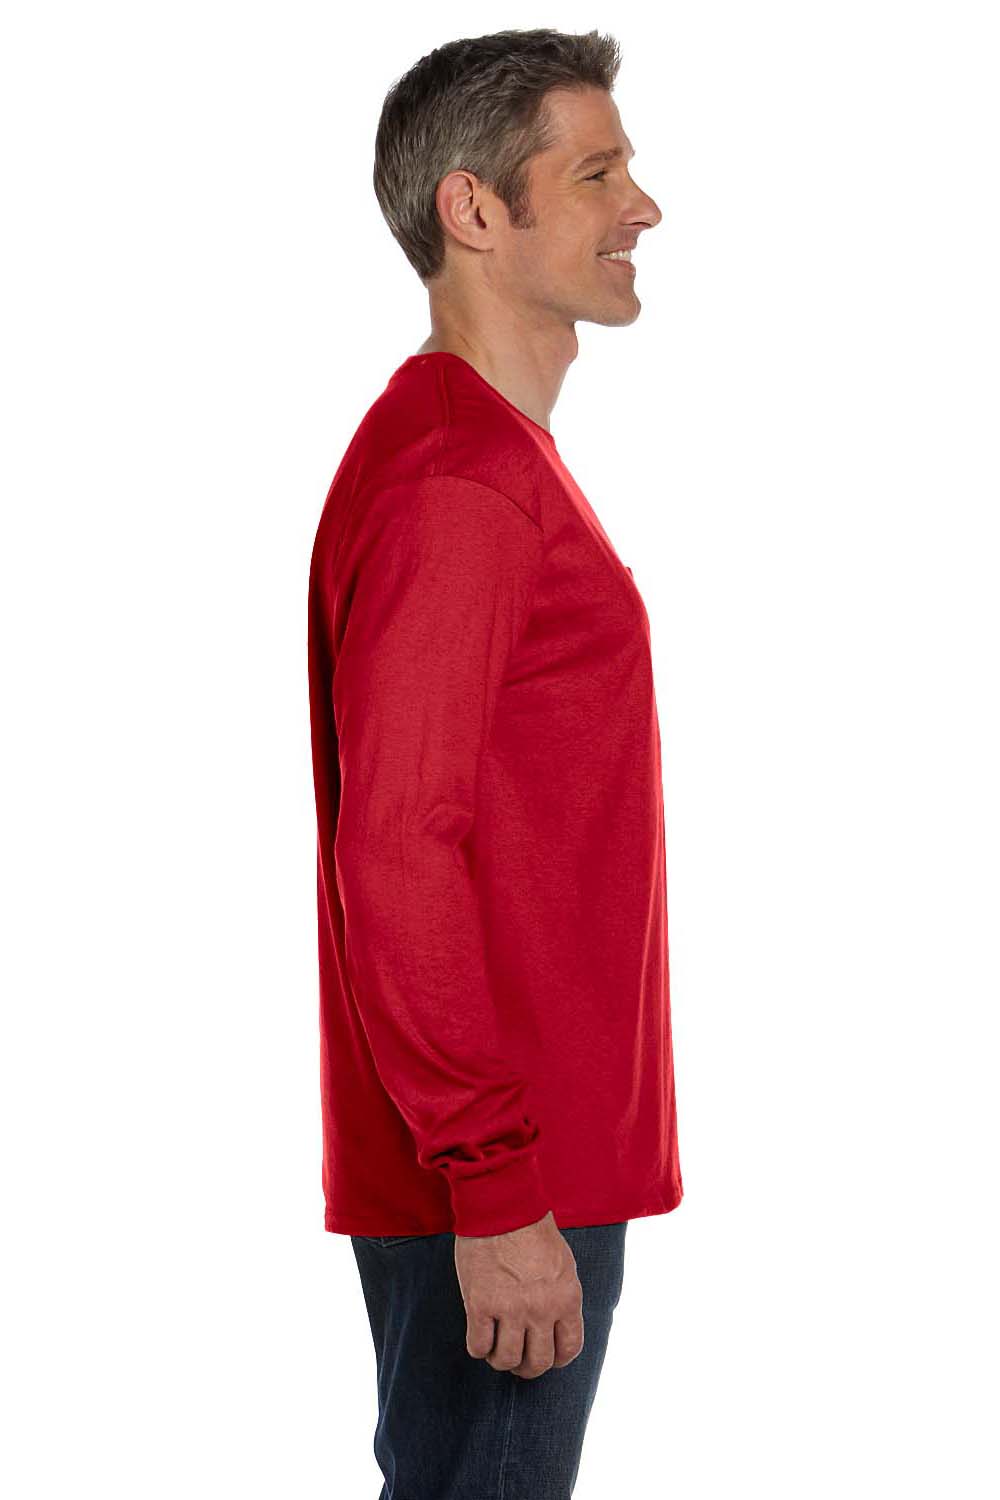 Hanes 5596 Mens ComfortSoft Long Sleeve Crewneck T-Shirt w/ Pocket Red Side